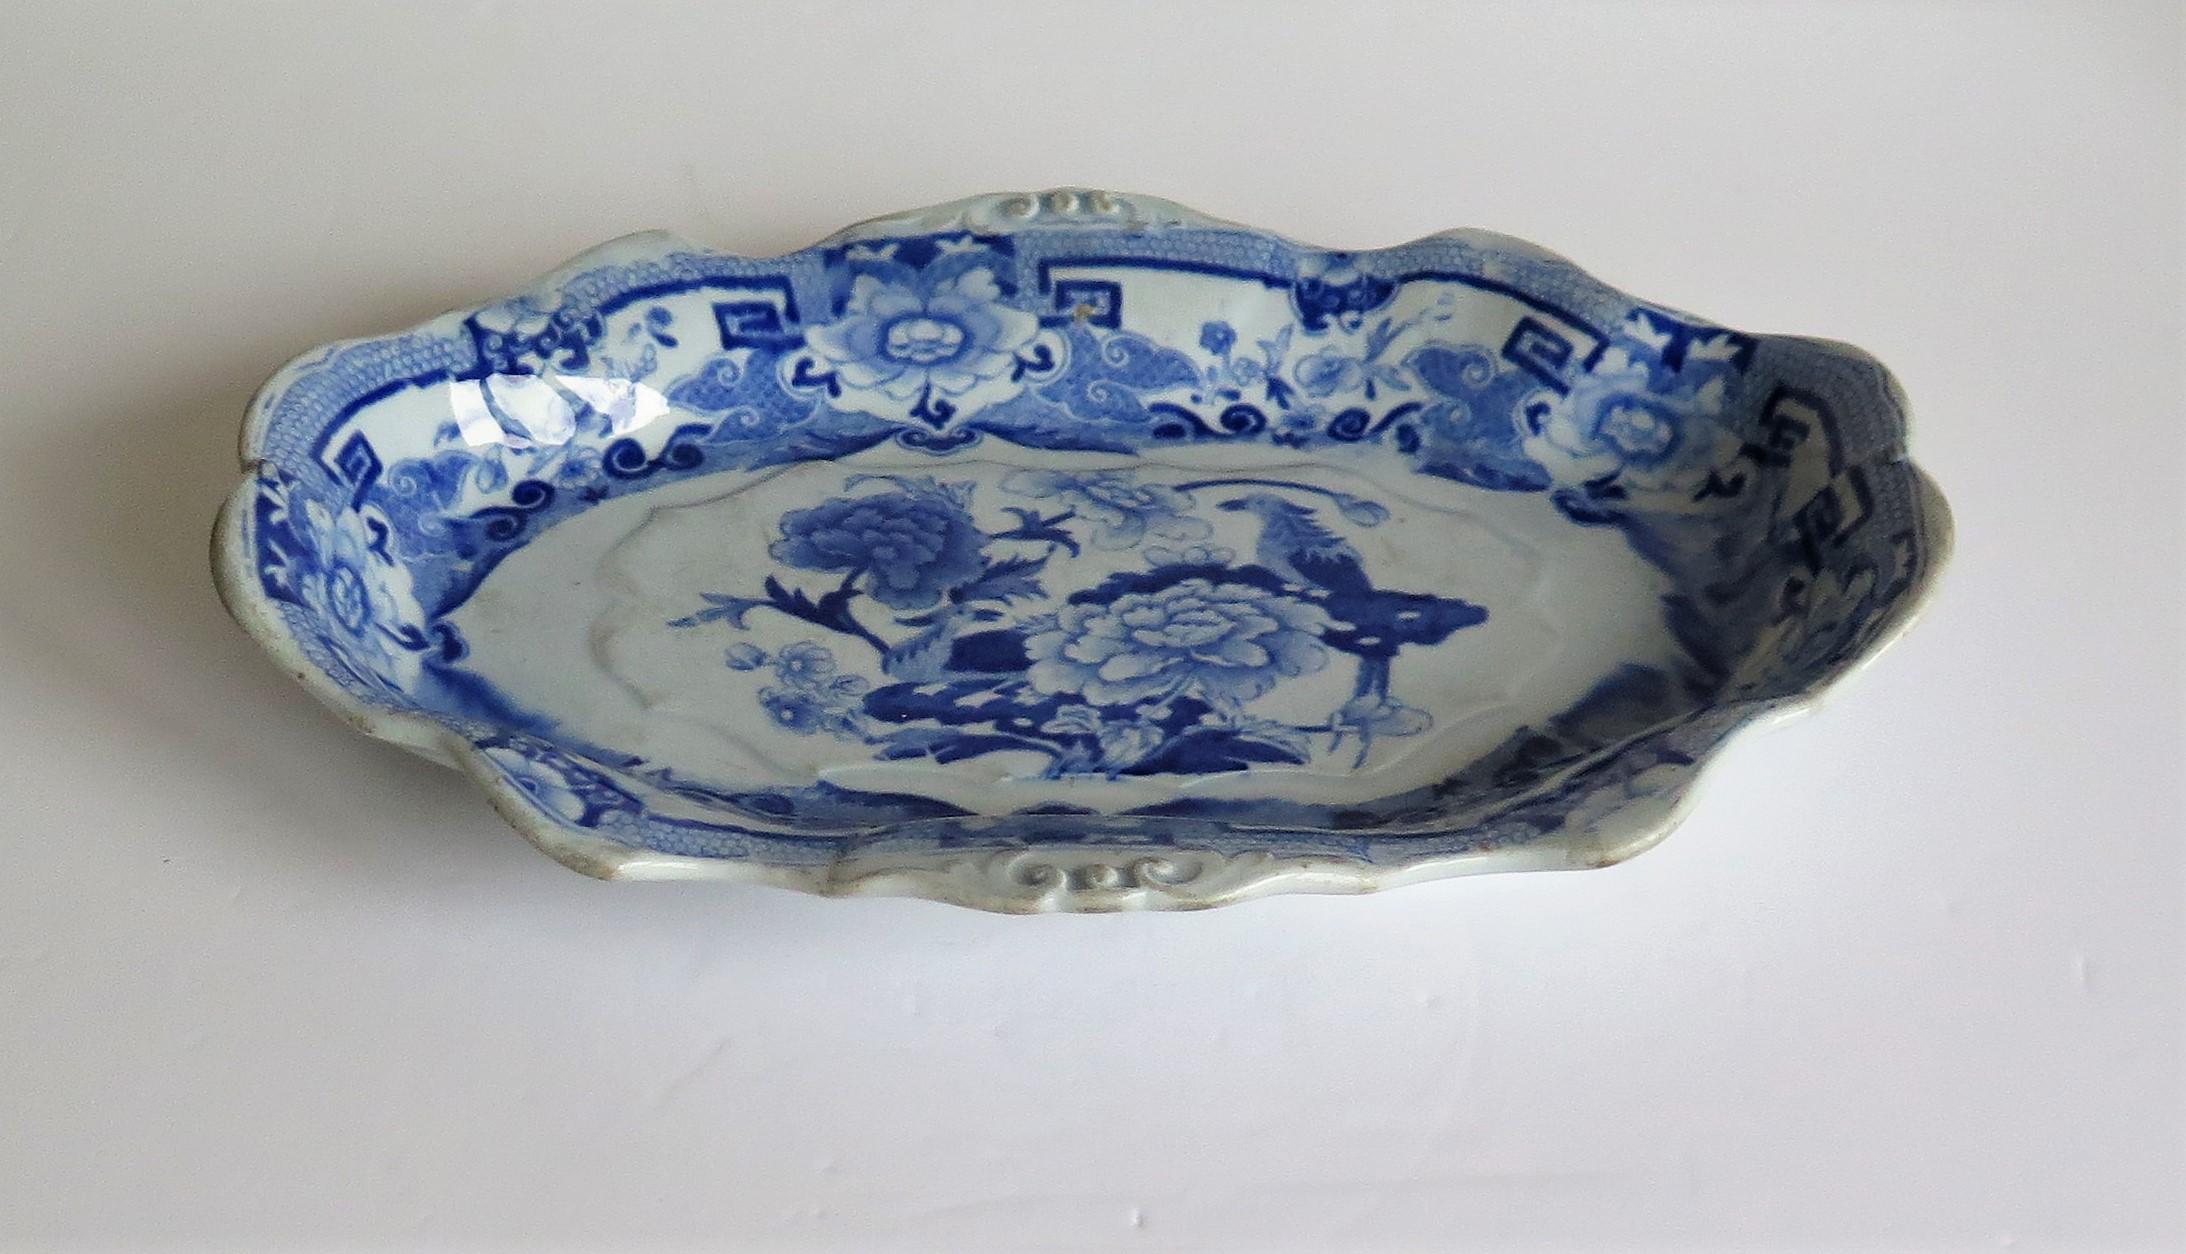 English Mason's Ironstone Serving Dish Blue and White India Pheasants Pattern, circa 1820